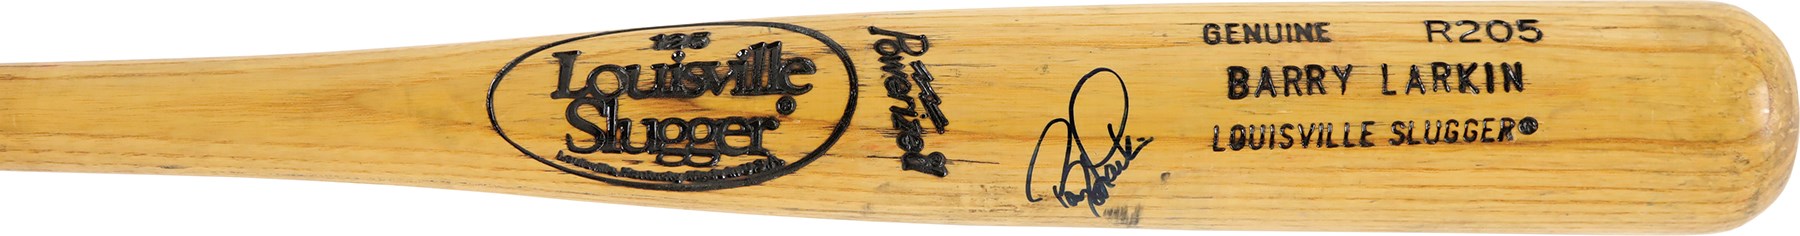 - 1986-1989 Barry Larkin Rookie Era Signed Game Used Bat